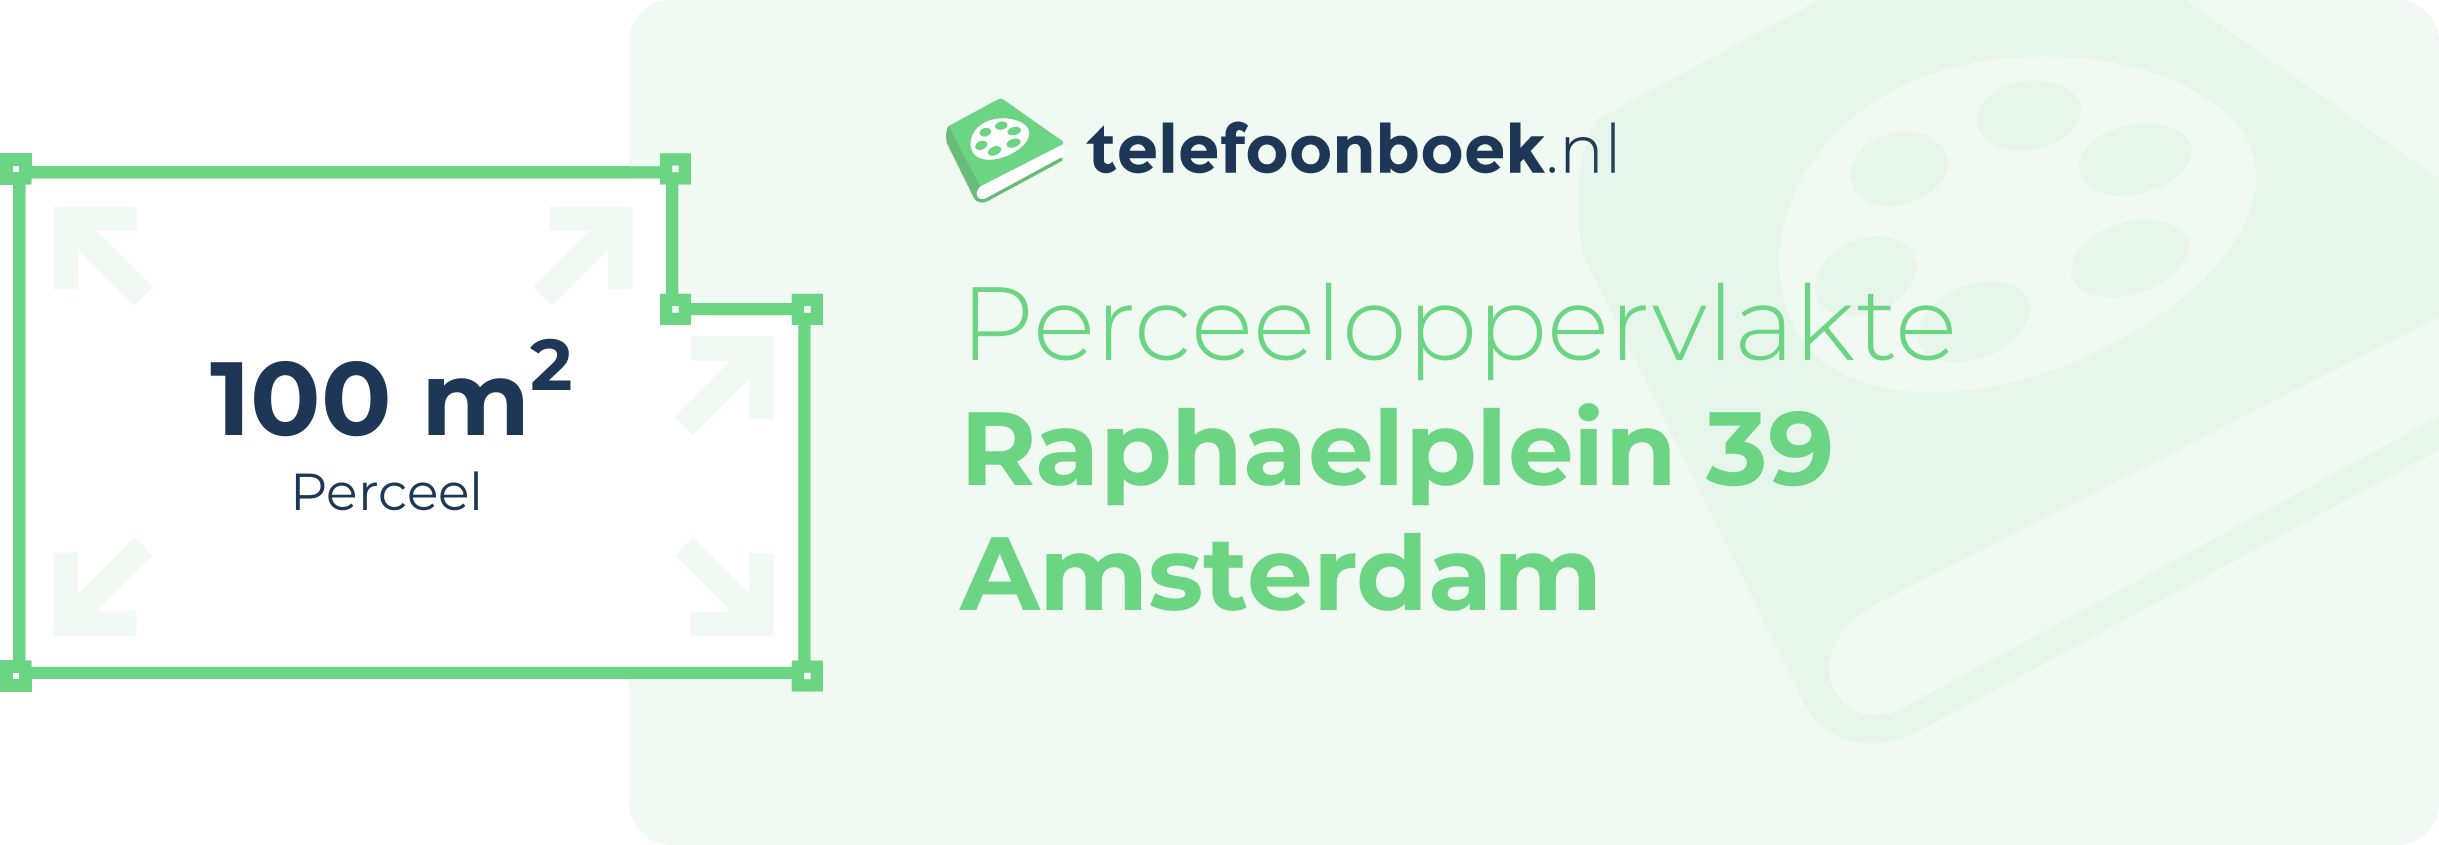 Perceeloppervlakte Raphaelplein 39 Amsterdam